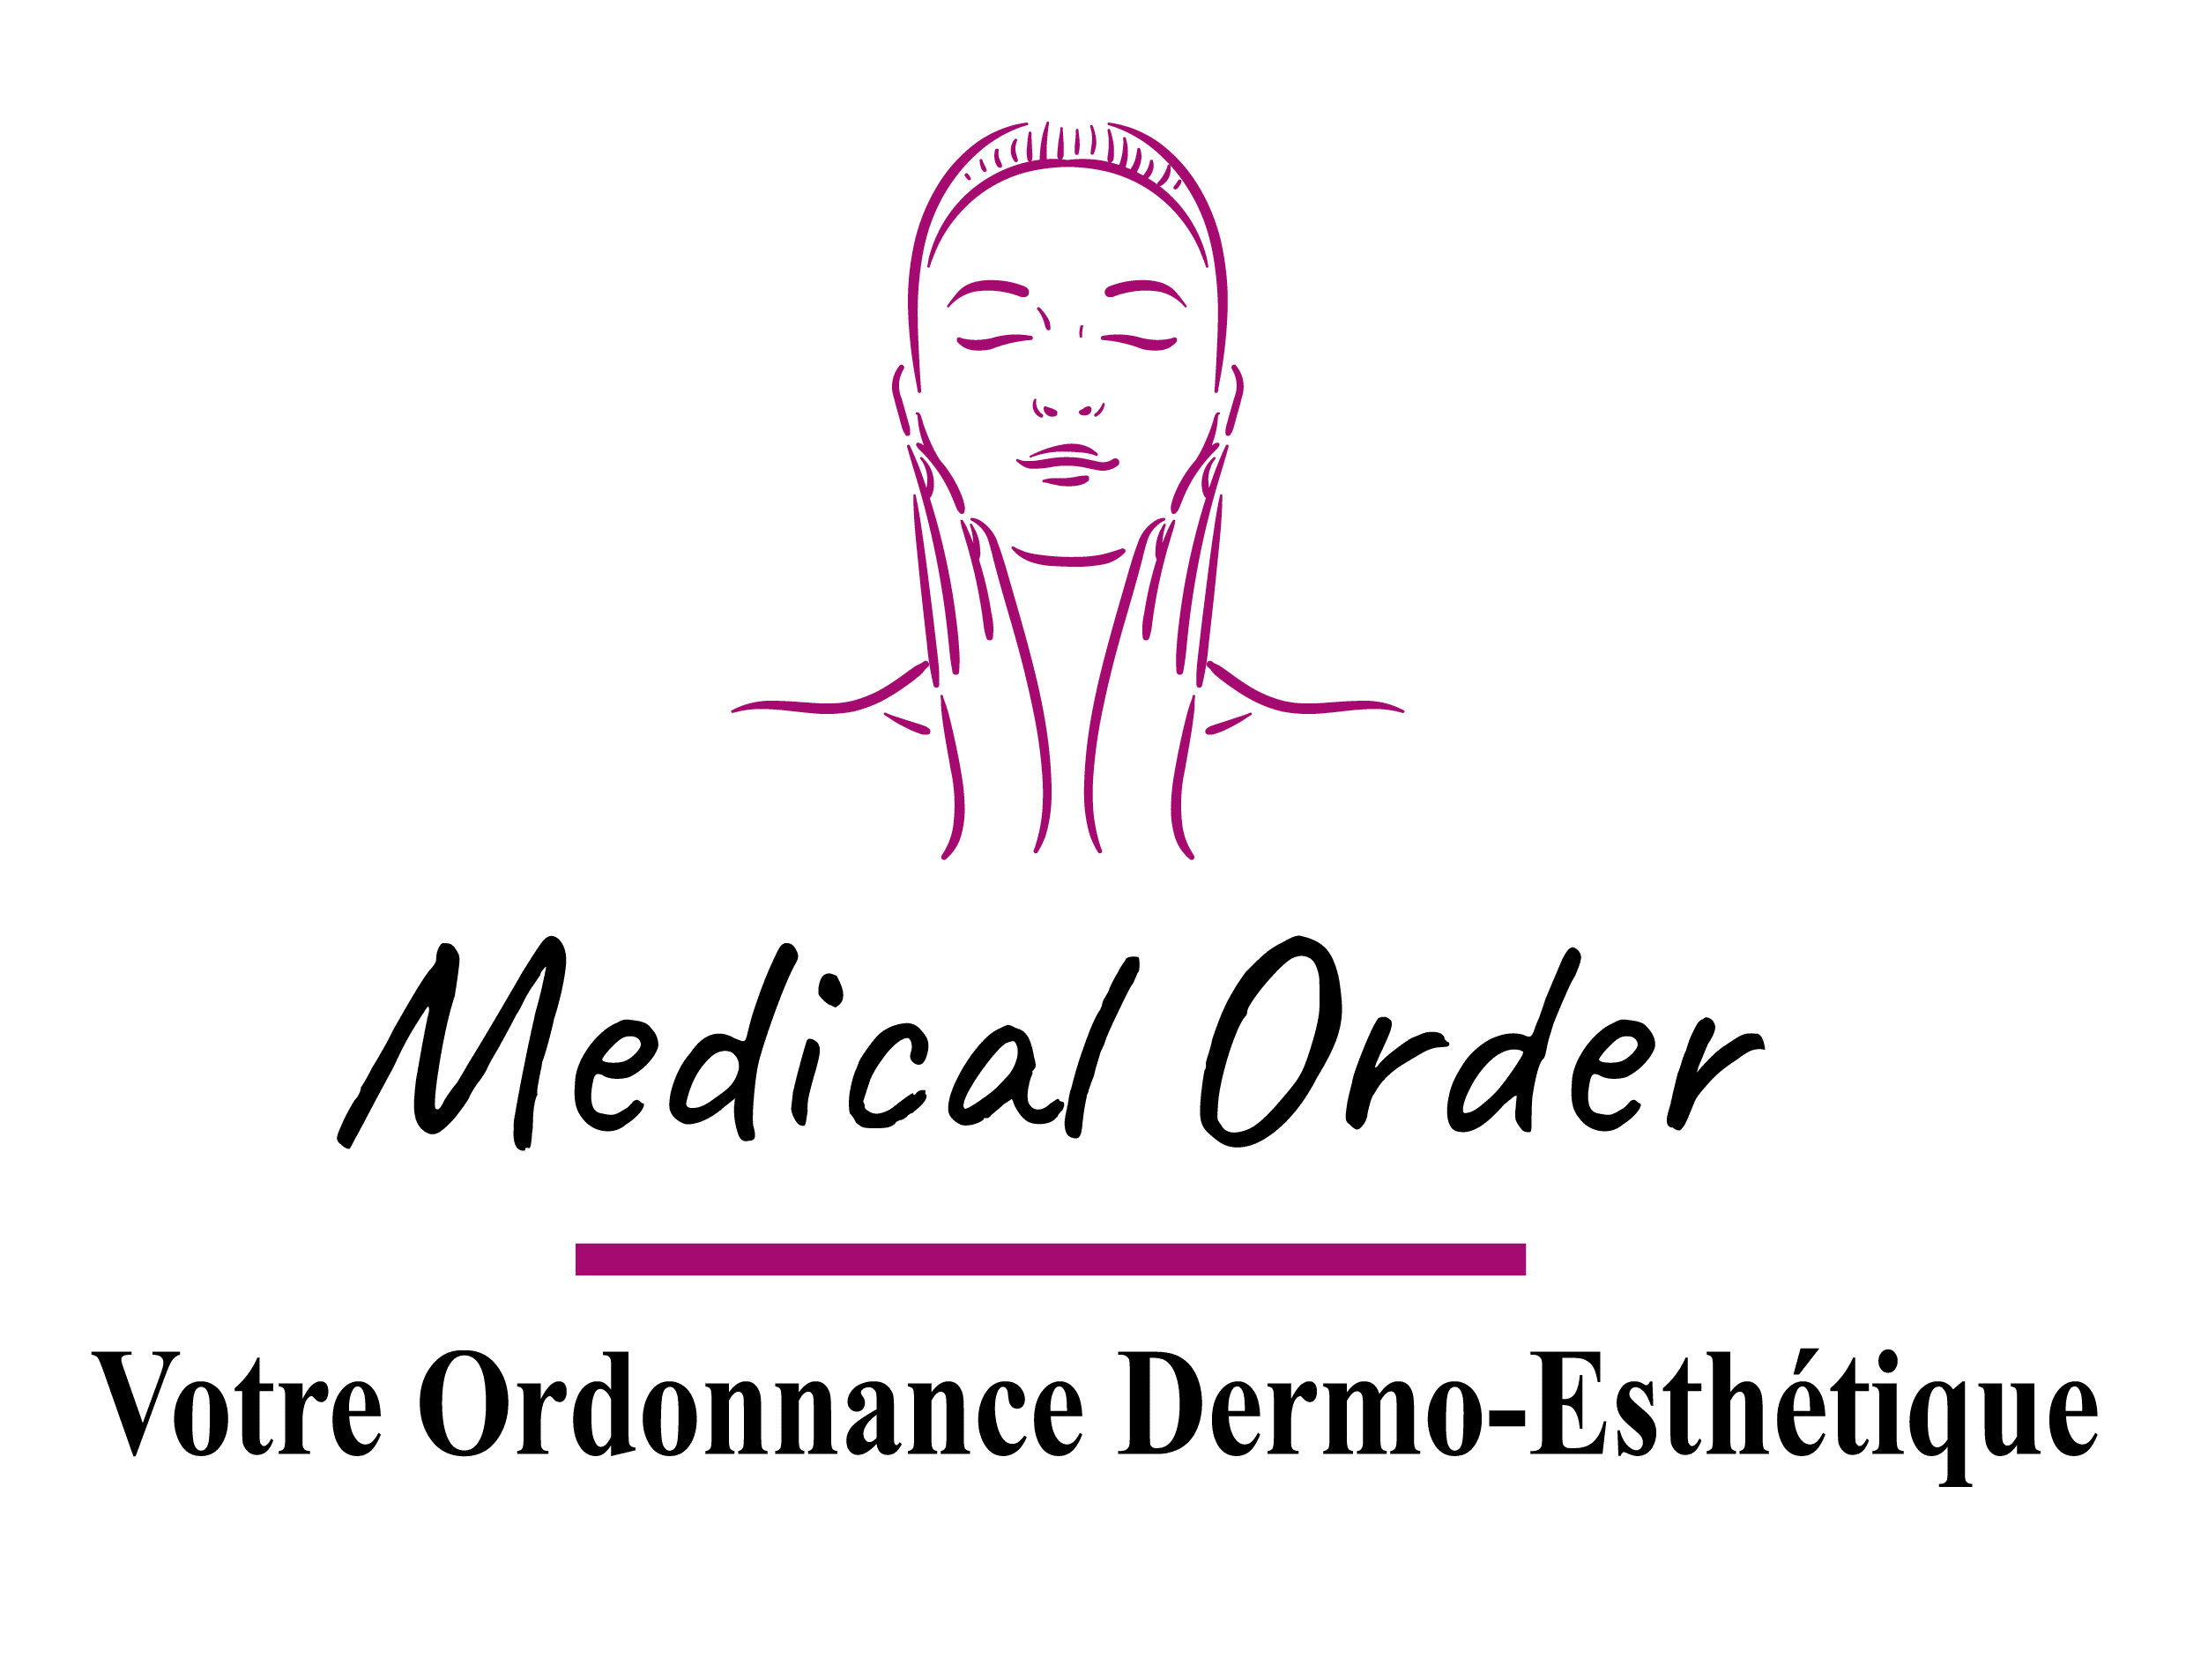 Medical Order - Soins anti-âge